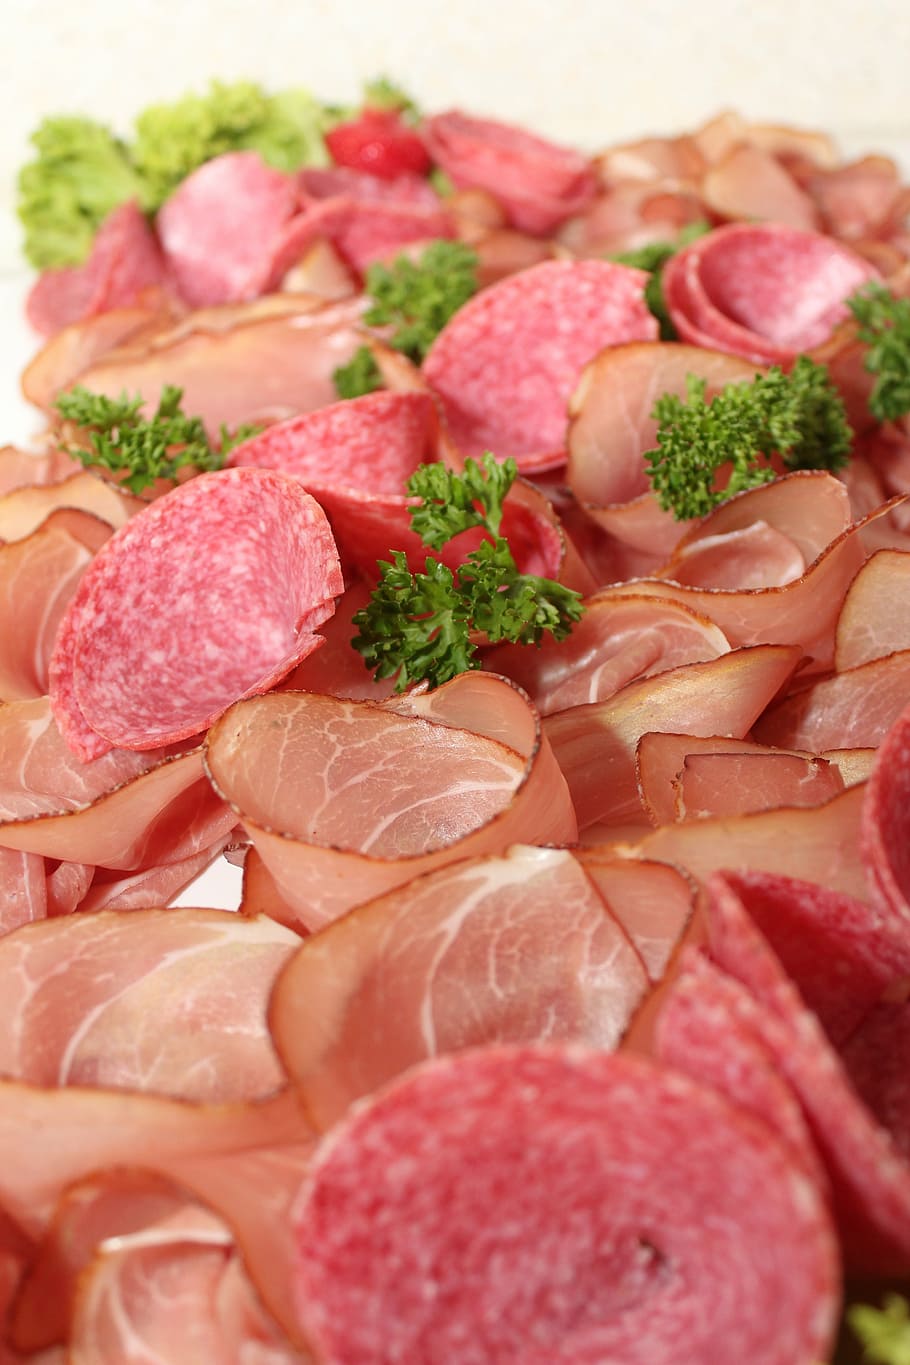 meat slices, wurstplatte, sausage, mettwurst, ham, smoked ham, smoked, snack, sausage presentation, food and drink